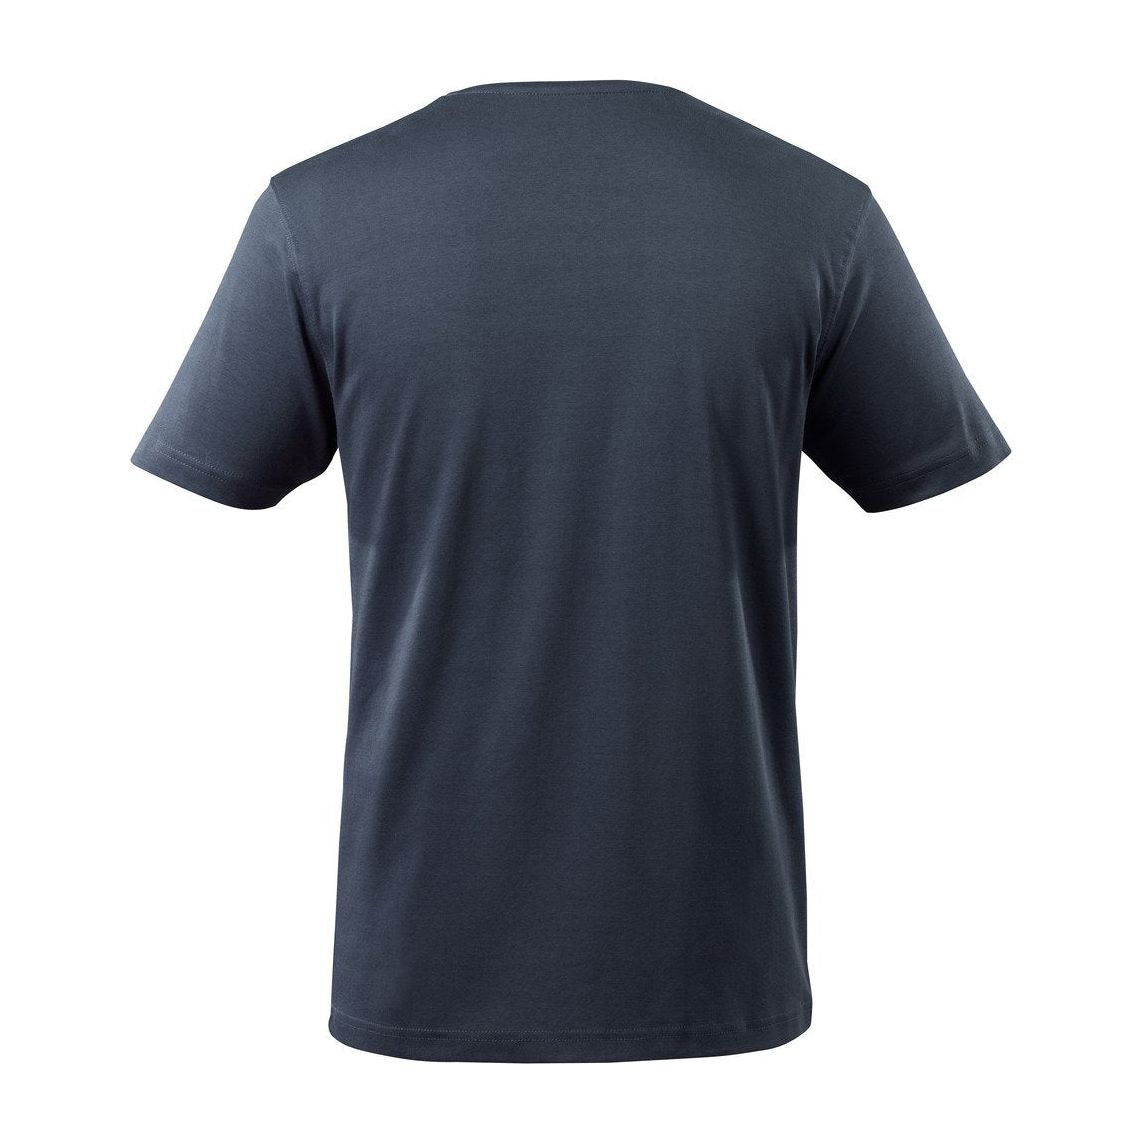 Mascot Vence T-shirt Slim-Fit Dark Navy Blue 51585-967-010 Back